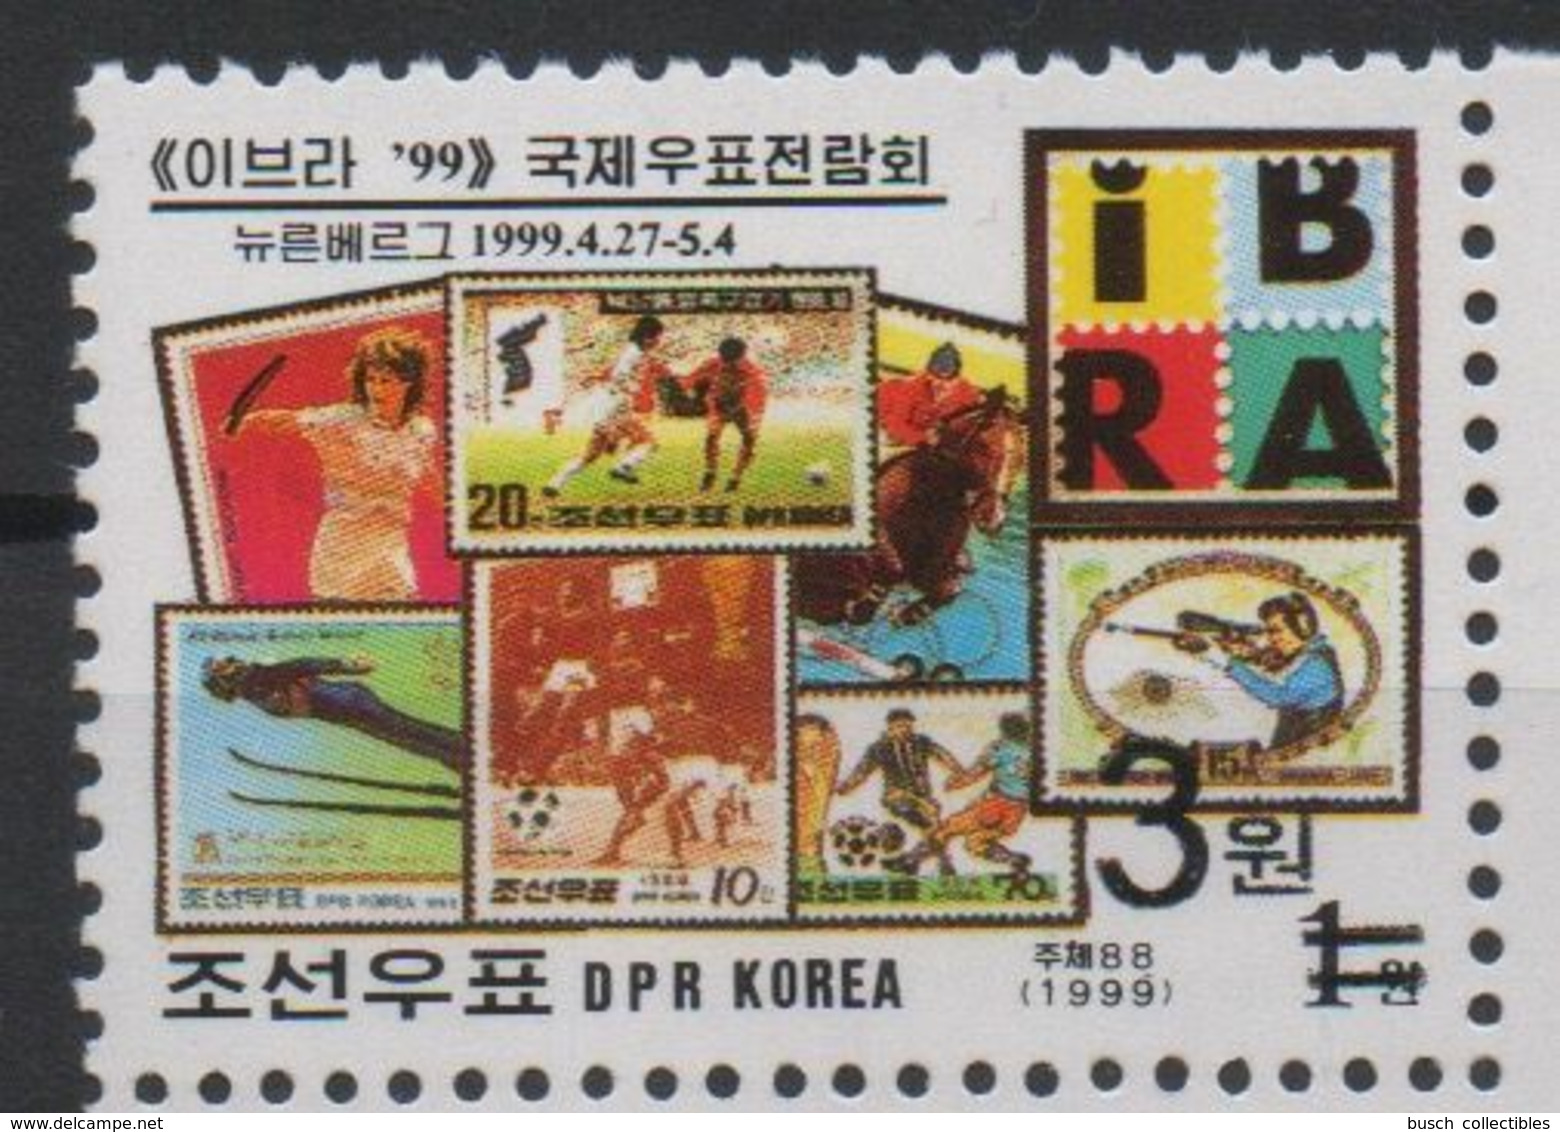 North Korea Corée Du Nord 2006 Mi. 5068 Surchargé OVERPRINT IBRA Nürnberg 1999 Stamp On Stamp Timbre Sur Timbre - Francobolli Su Francobolli